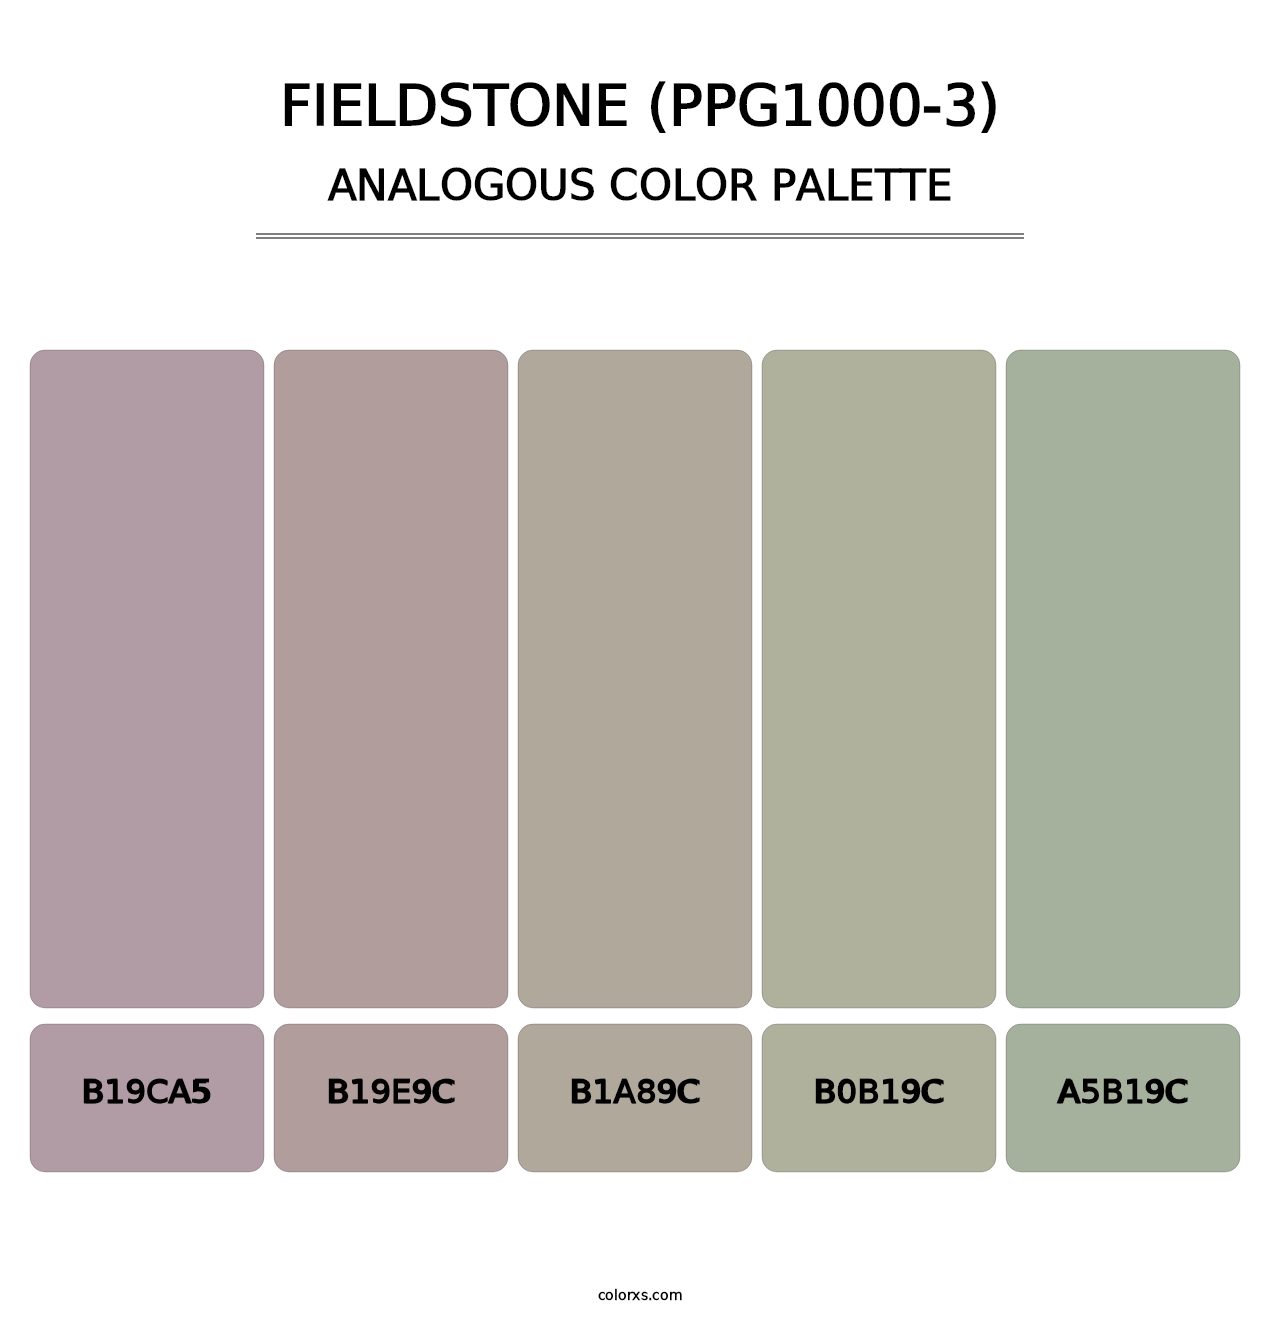 Fieldstone (PPG1000-3) - Analogous Color Palette